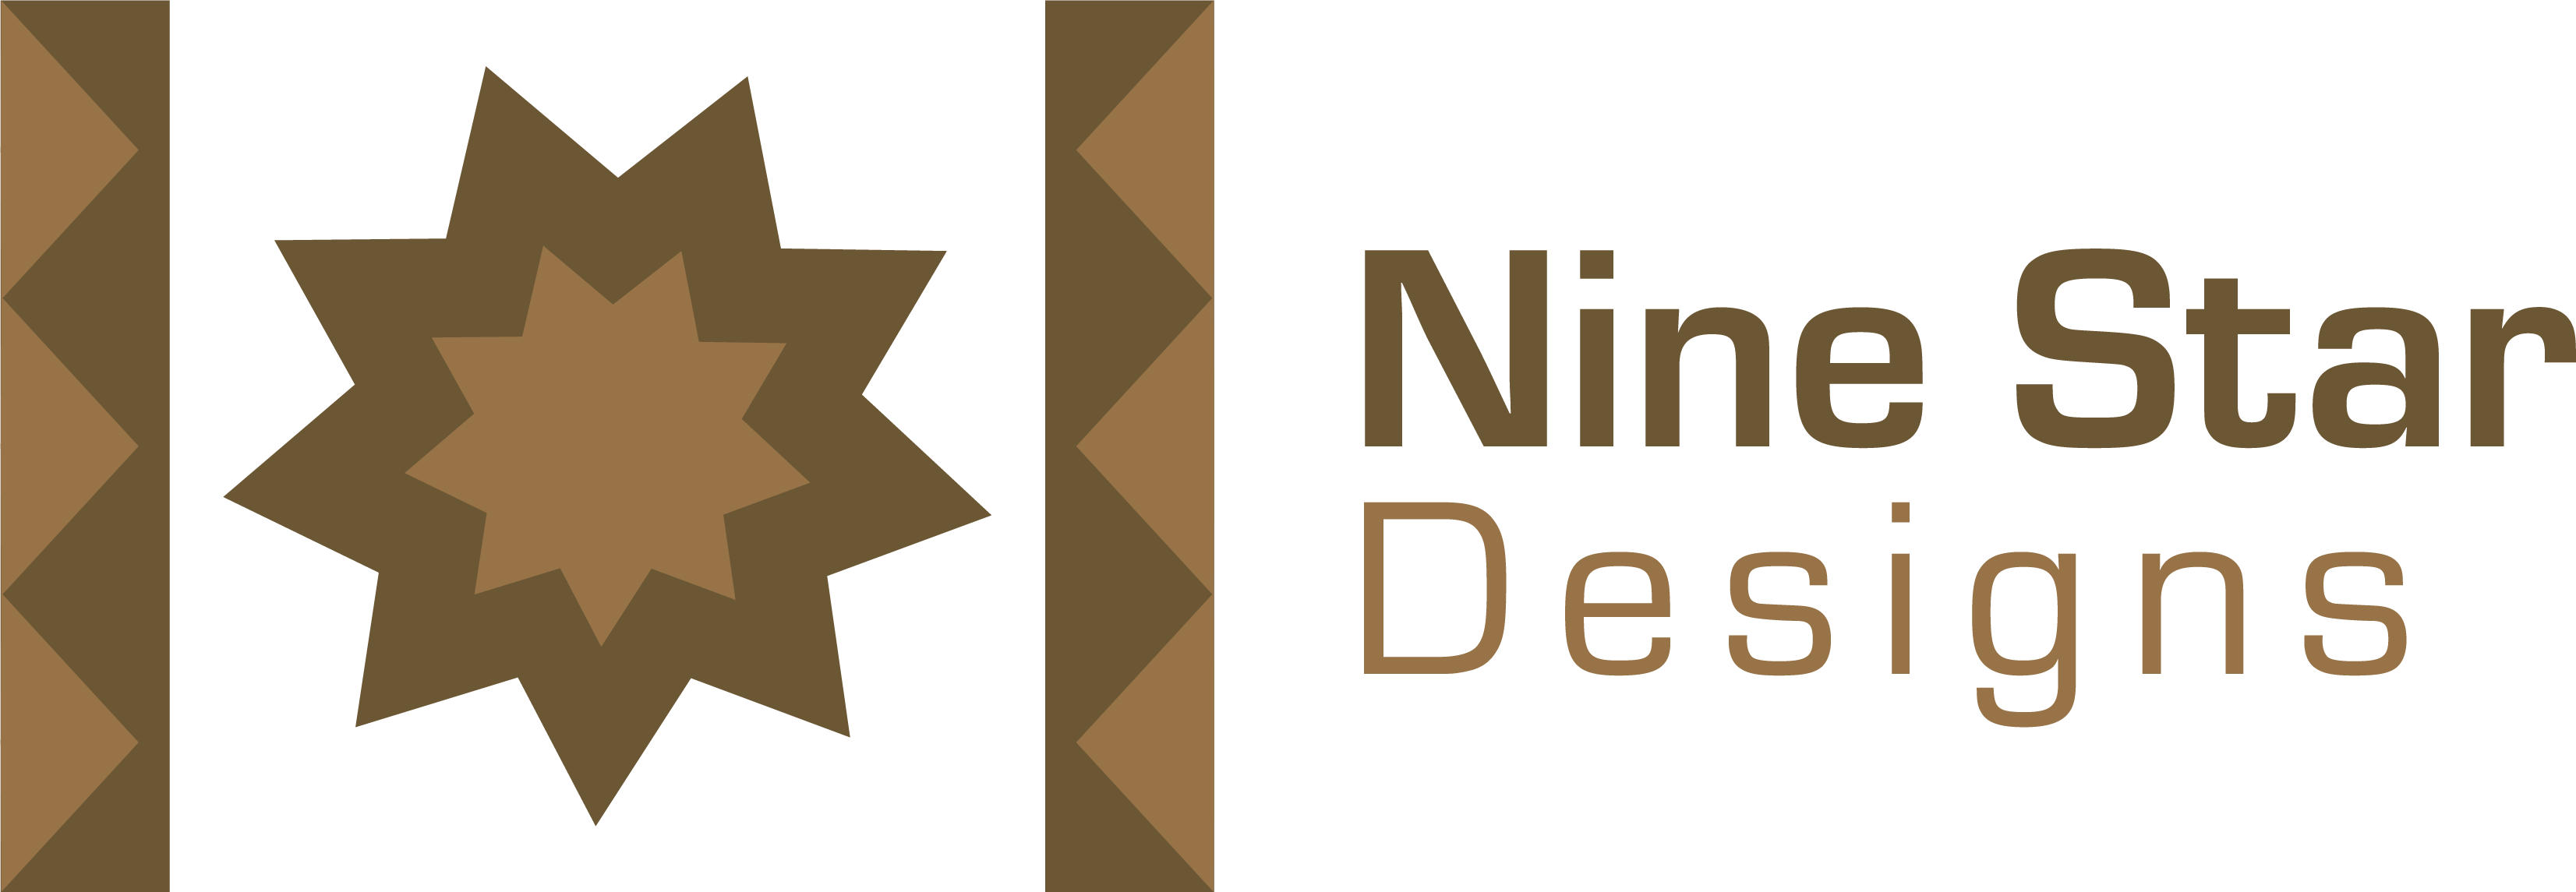 nine star designs